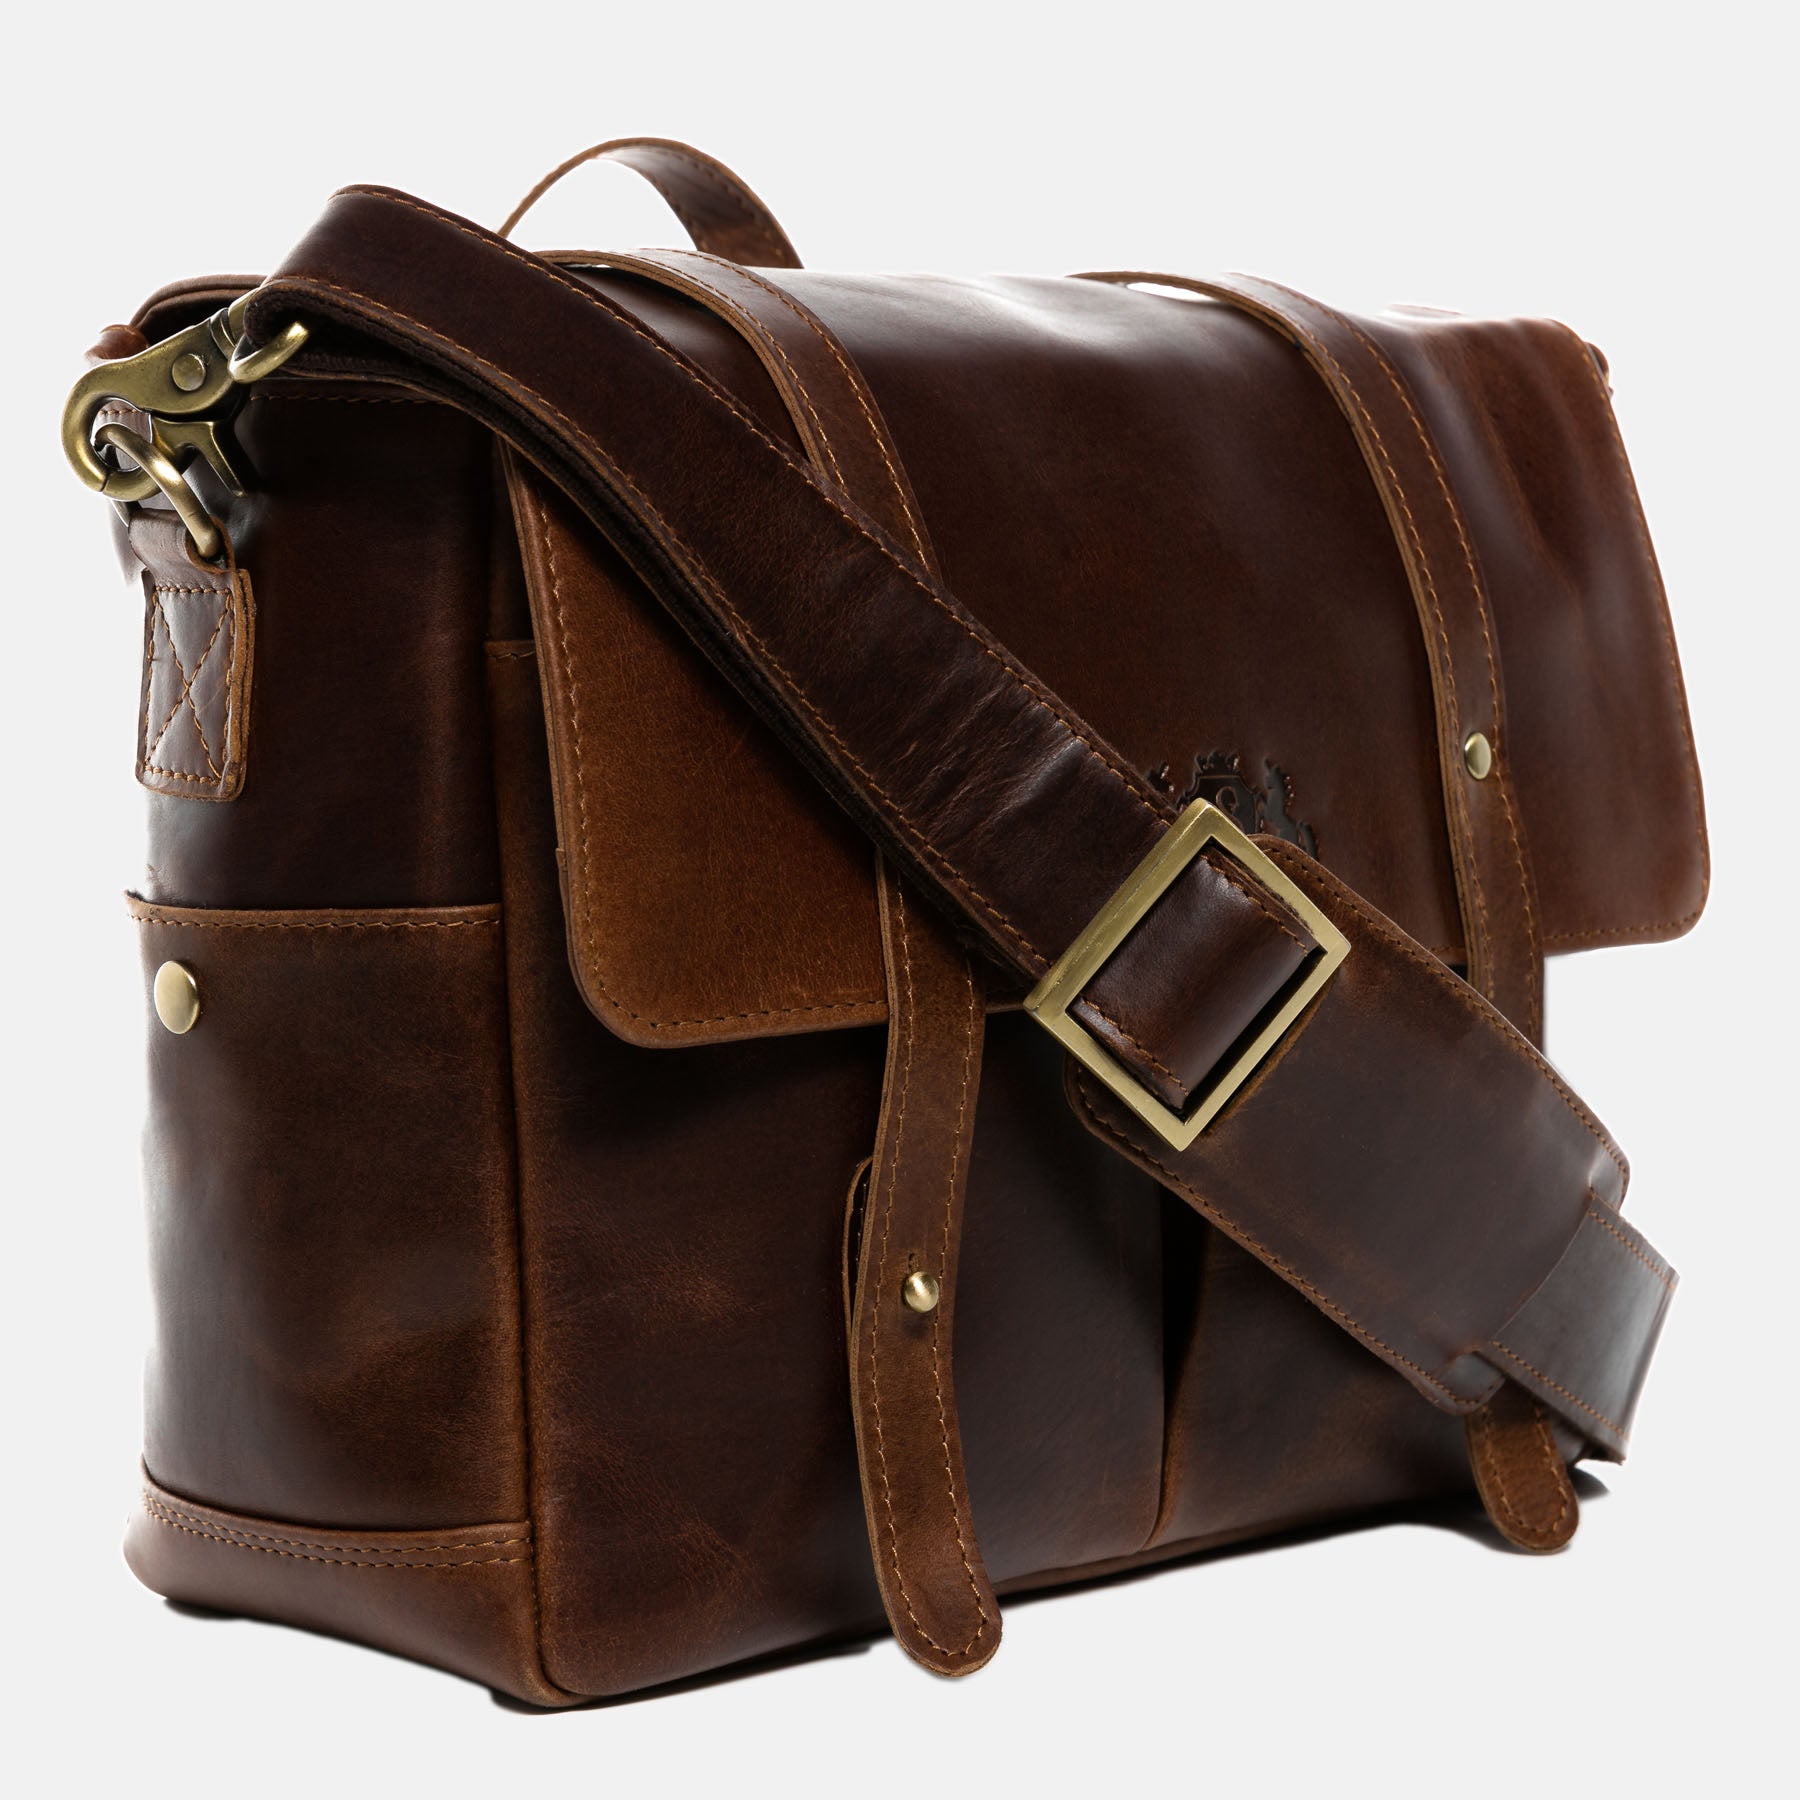 Camera bag HEATHROW natural leather brown-cognac